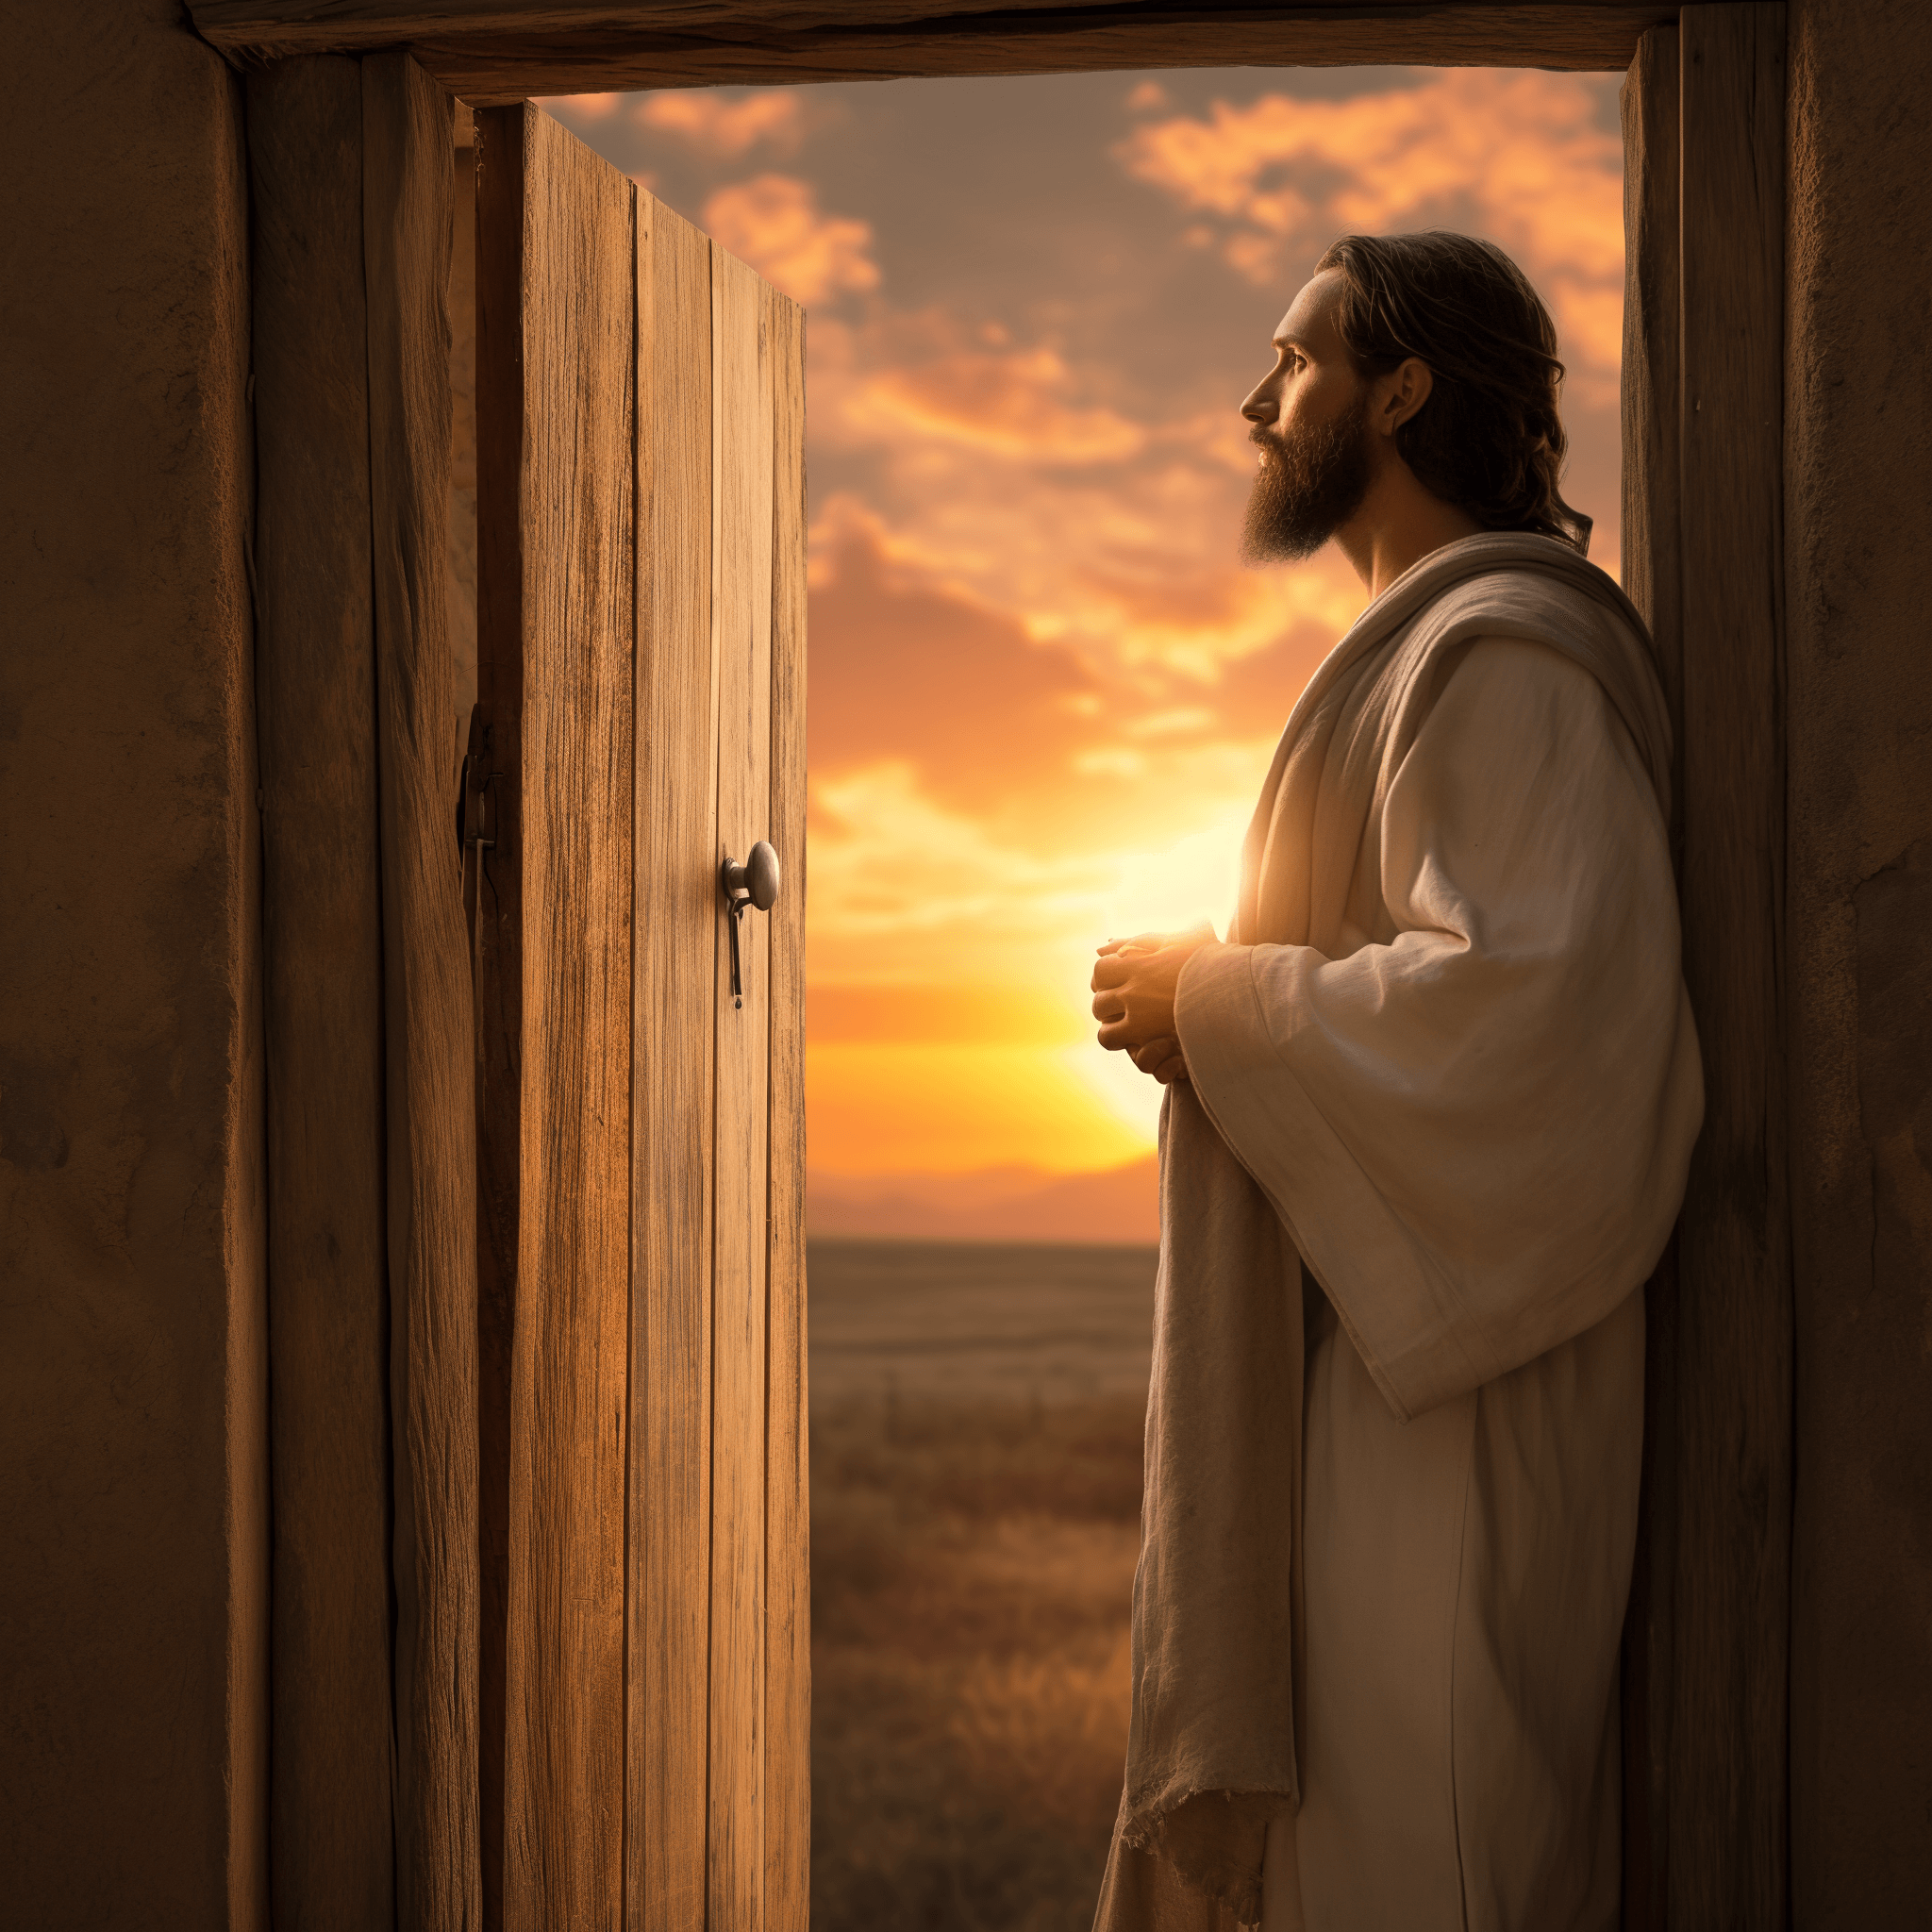 Jesus knocking on the door of your heart